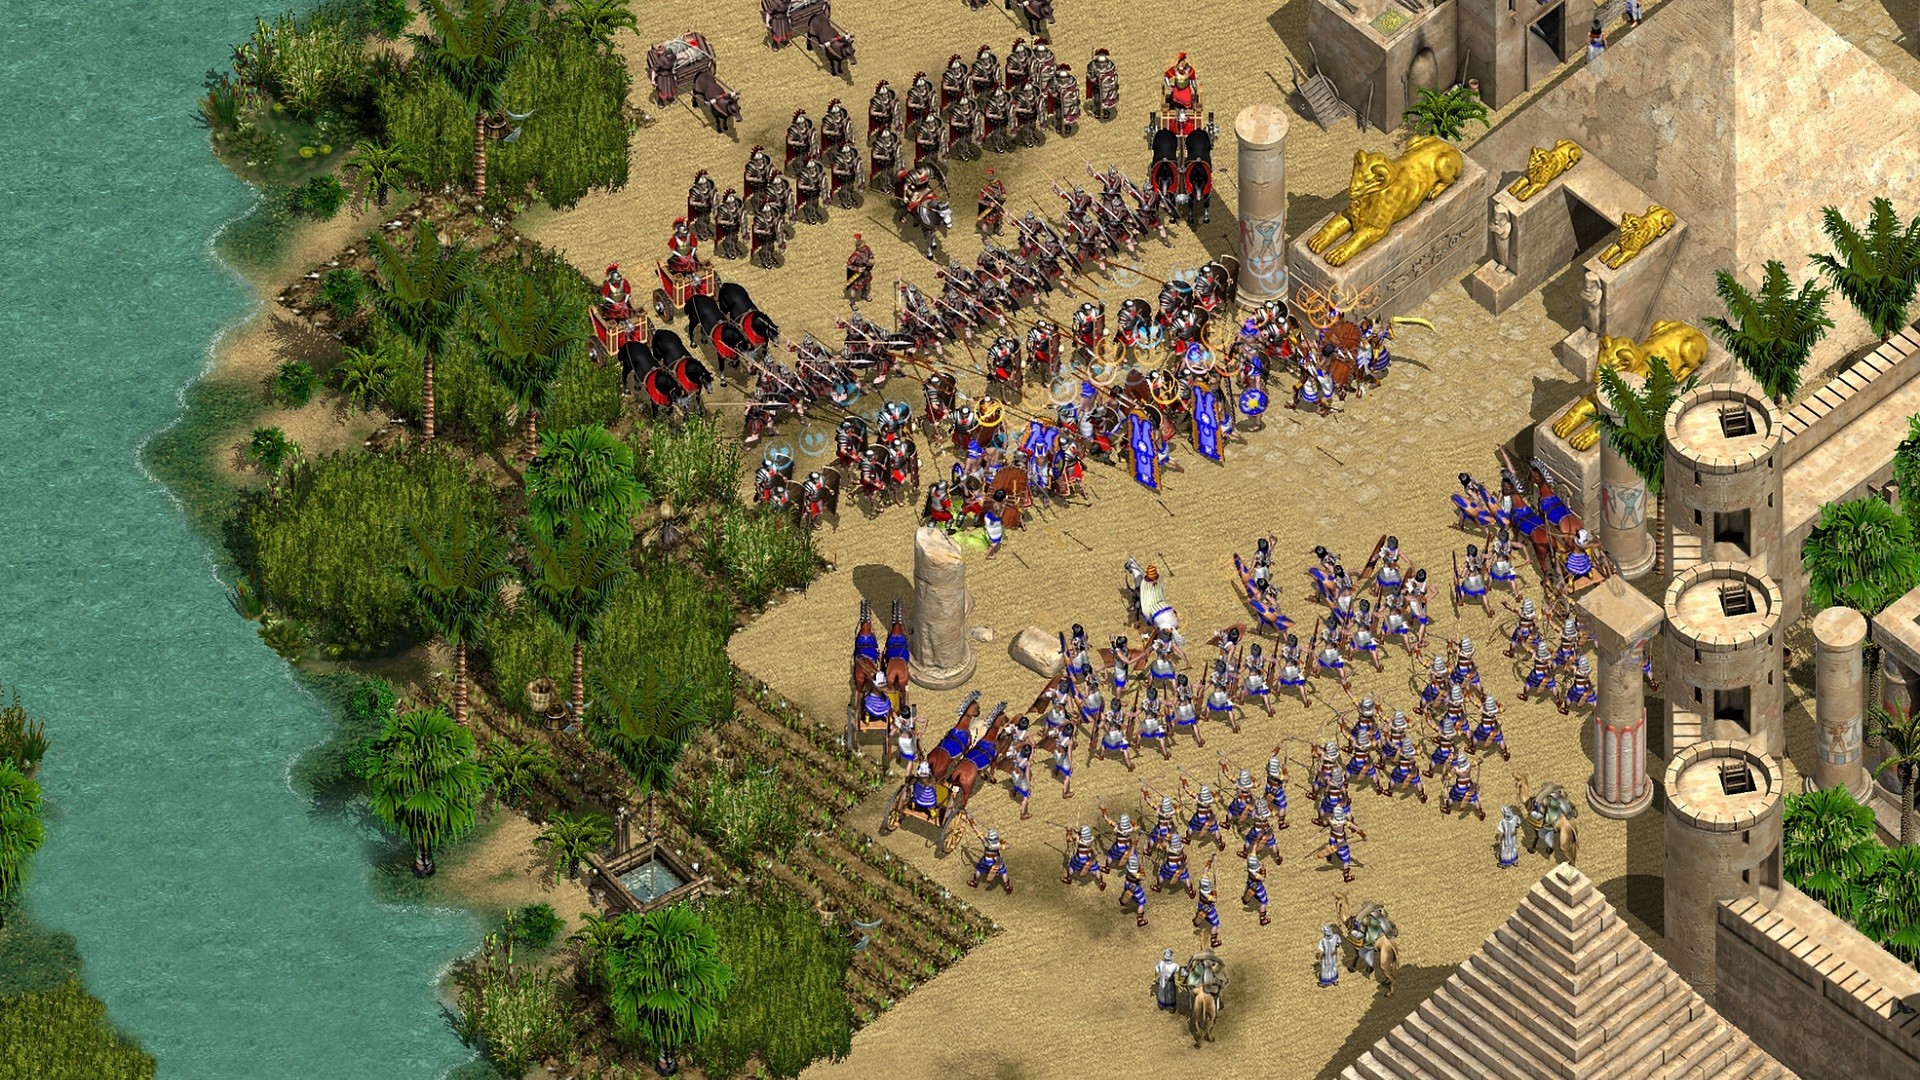 Imperivm RTC：高清版罗马帝国战争